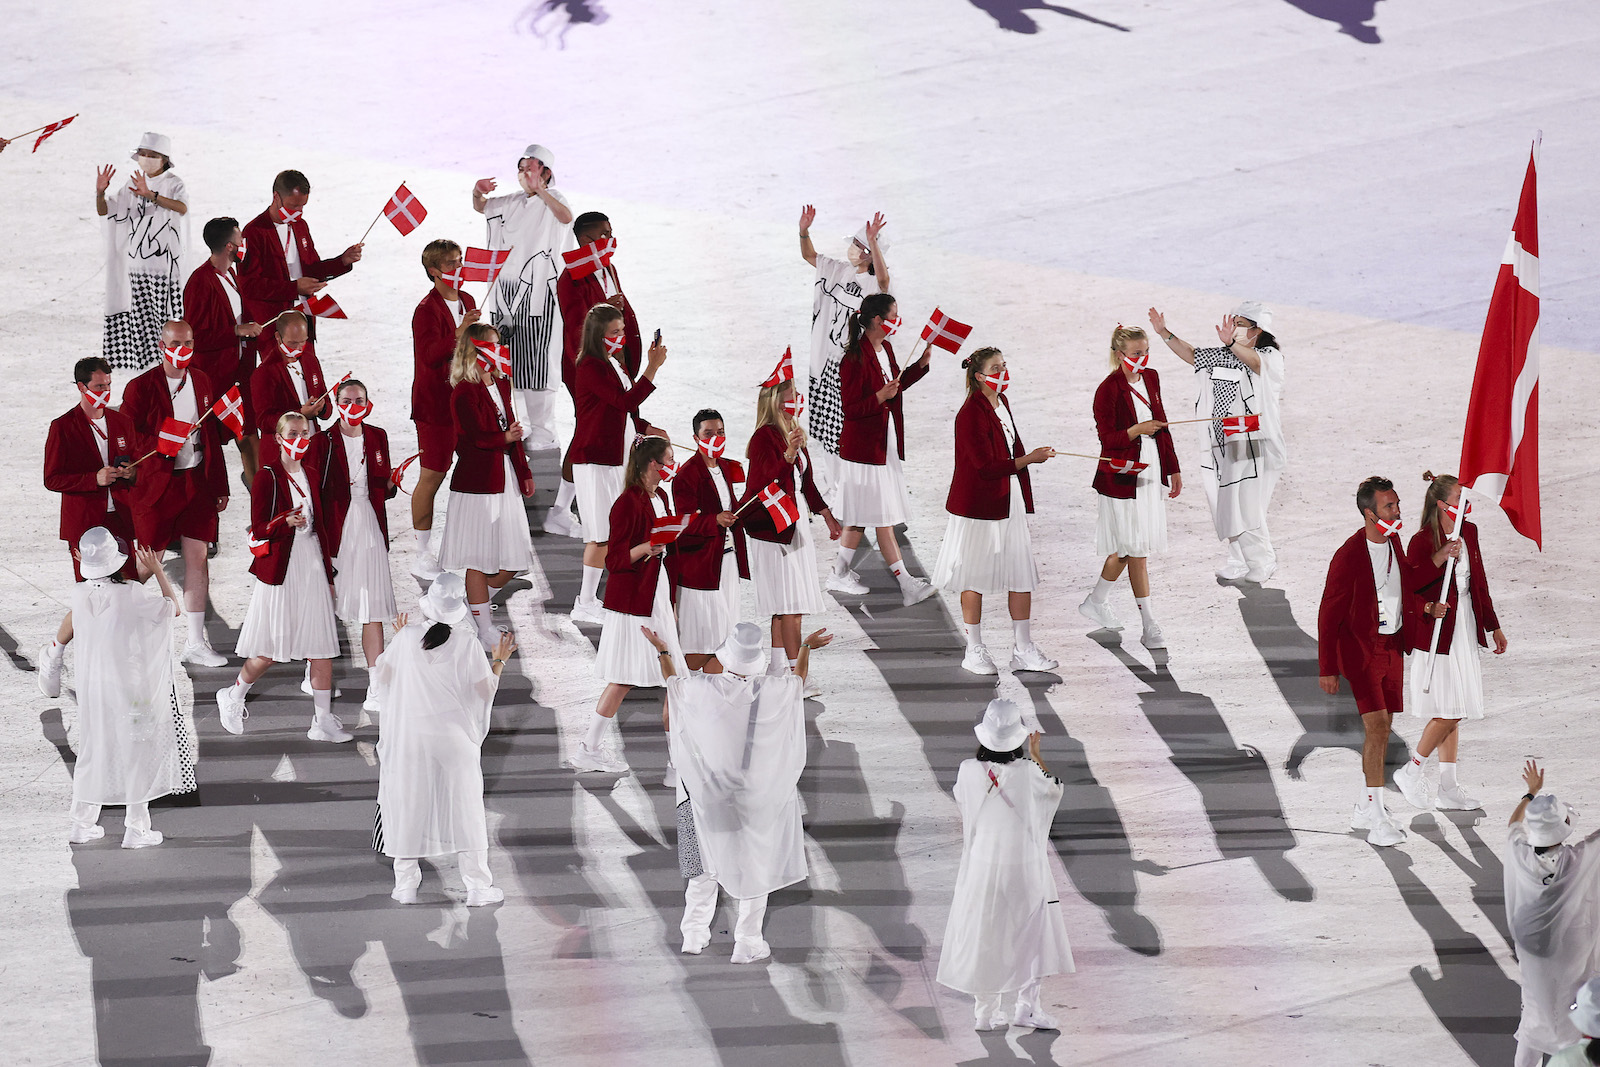 OL åbningsceremoni Danmark